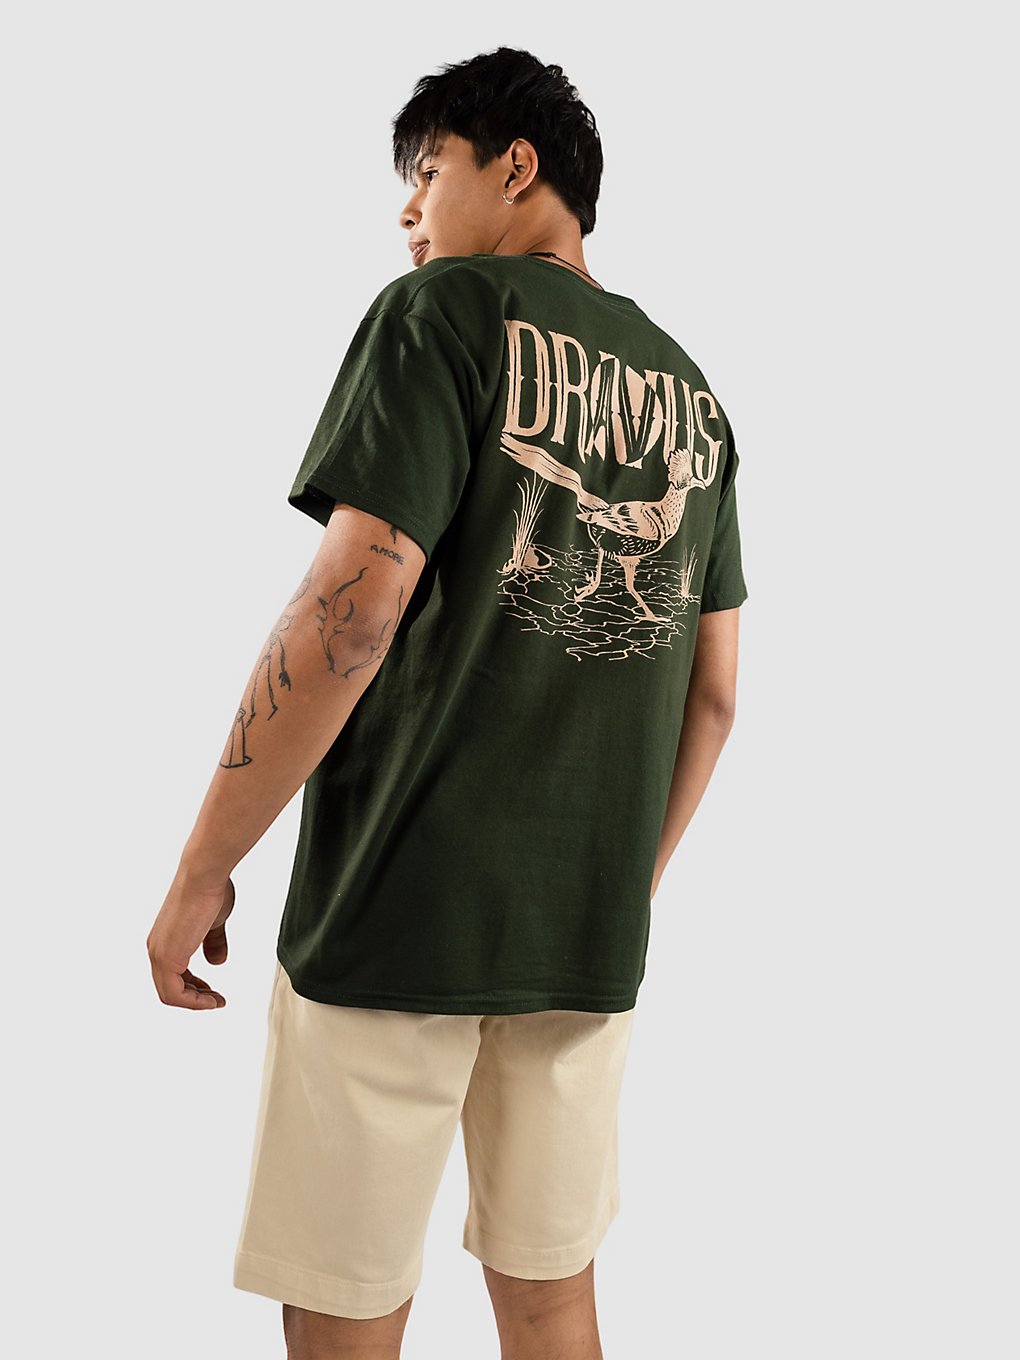 Dravus Road Runner T-Shirt dark green kaufen